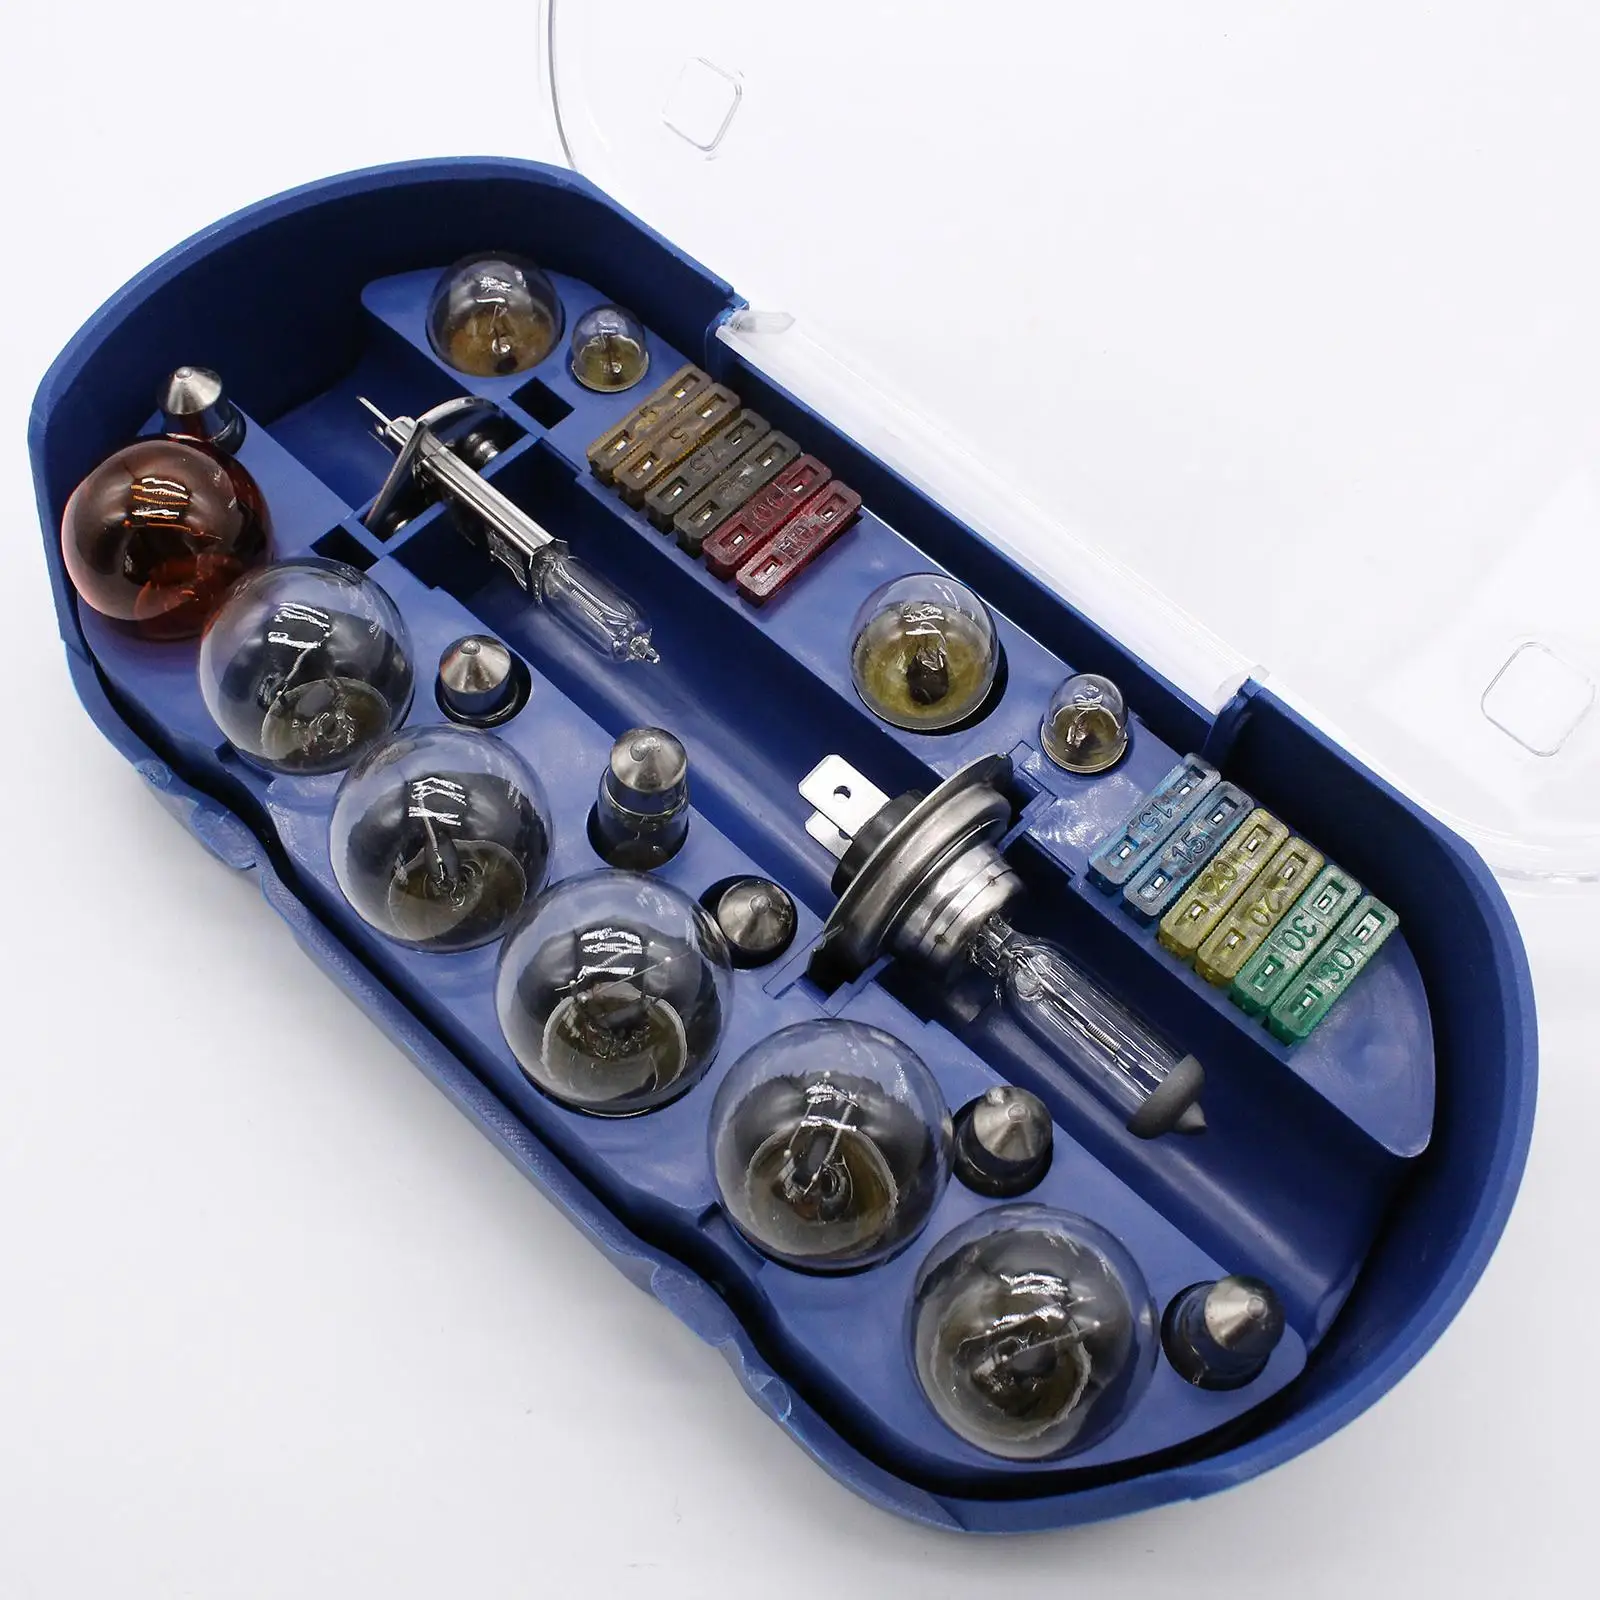 30x Car Spare Bulb Kit including H4 H7 Bulbs Fuses Lamp Box Travel Emergency Kit Halogen Lighting Bulbs Fuses Set Professional